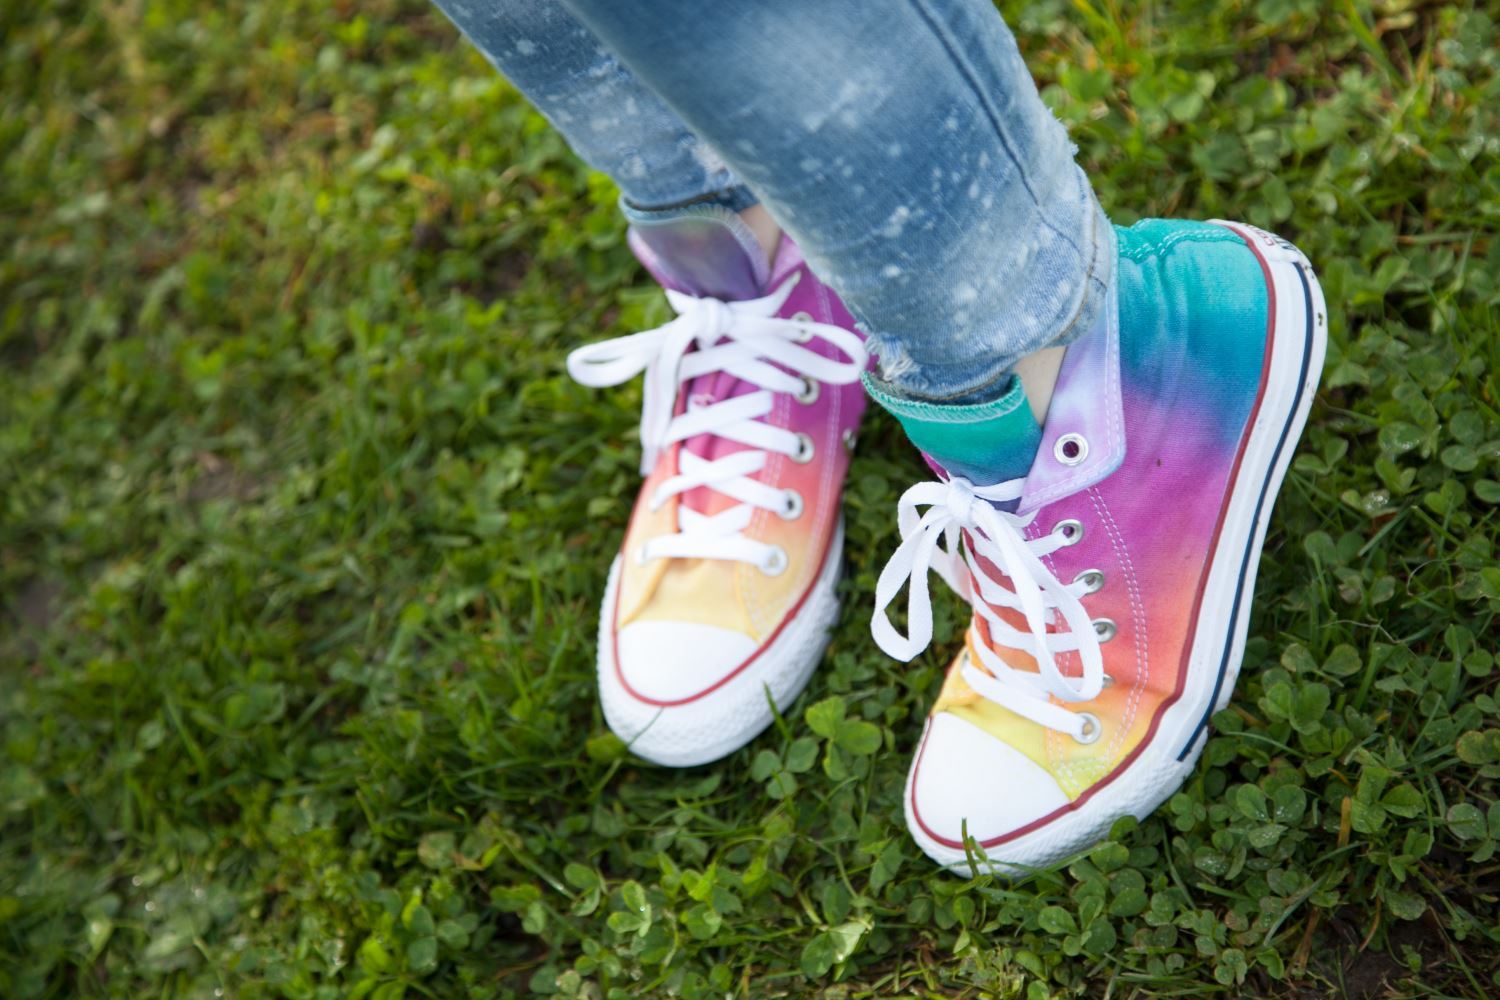 DIY Rainbow Ombré Tie-Dye Shoes